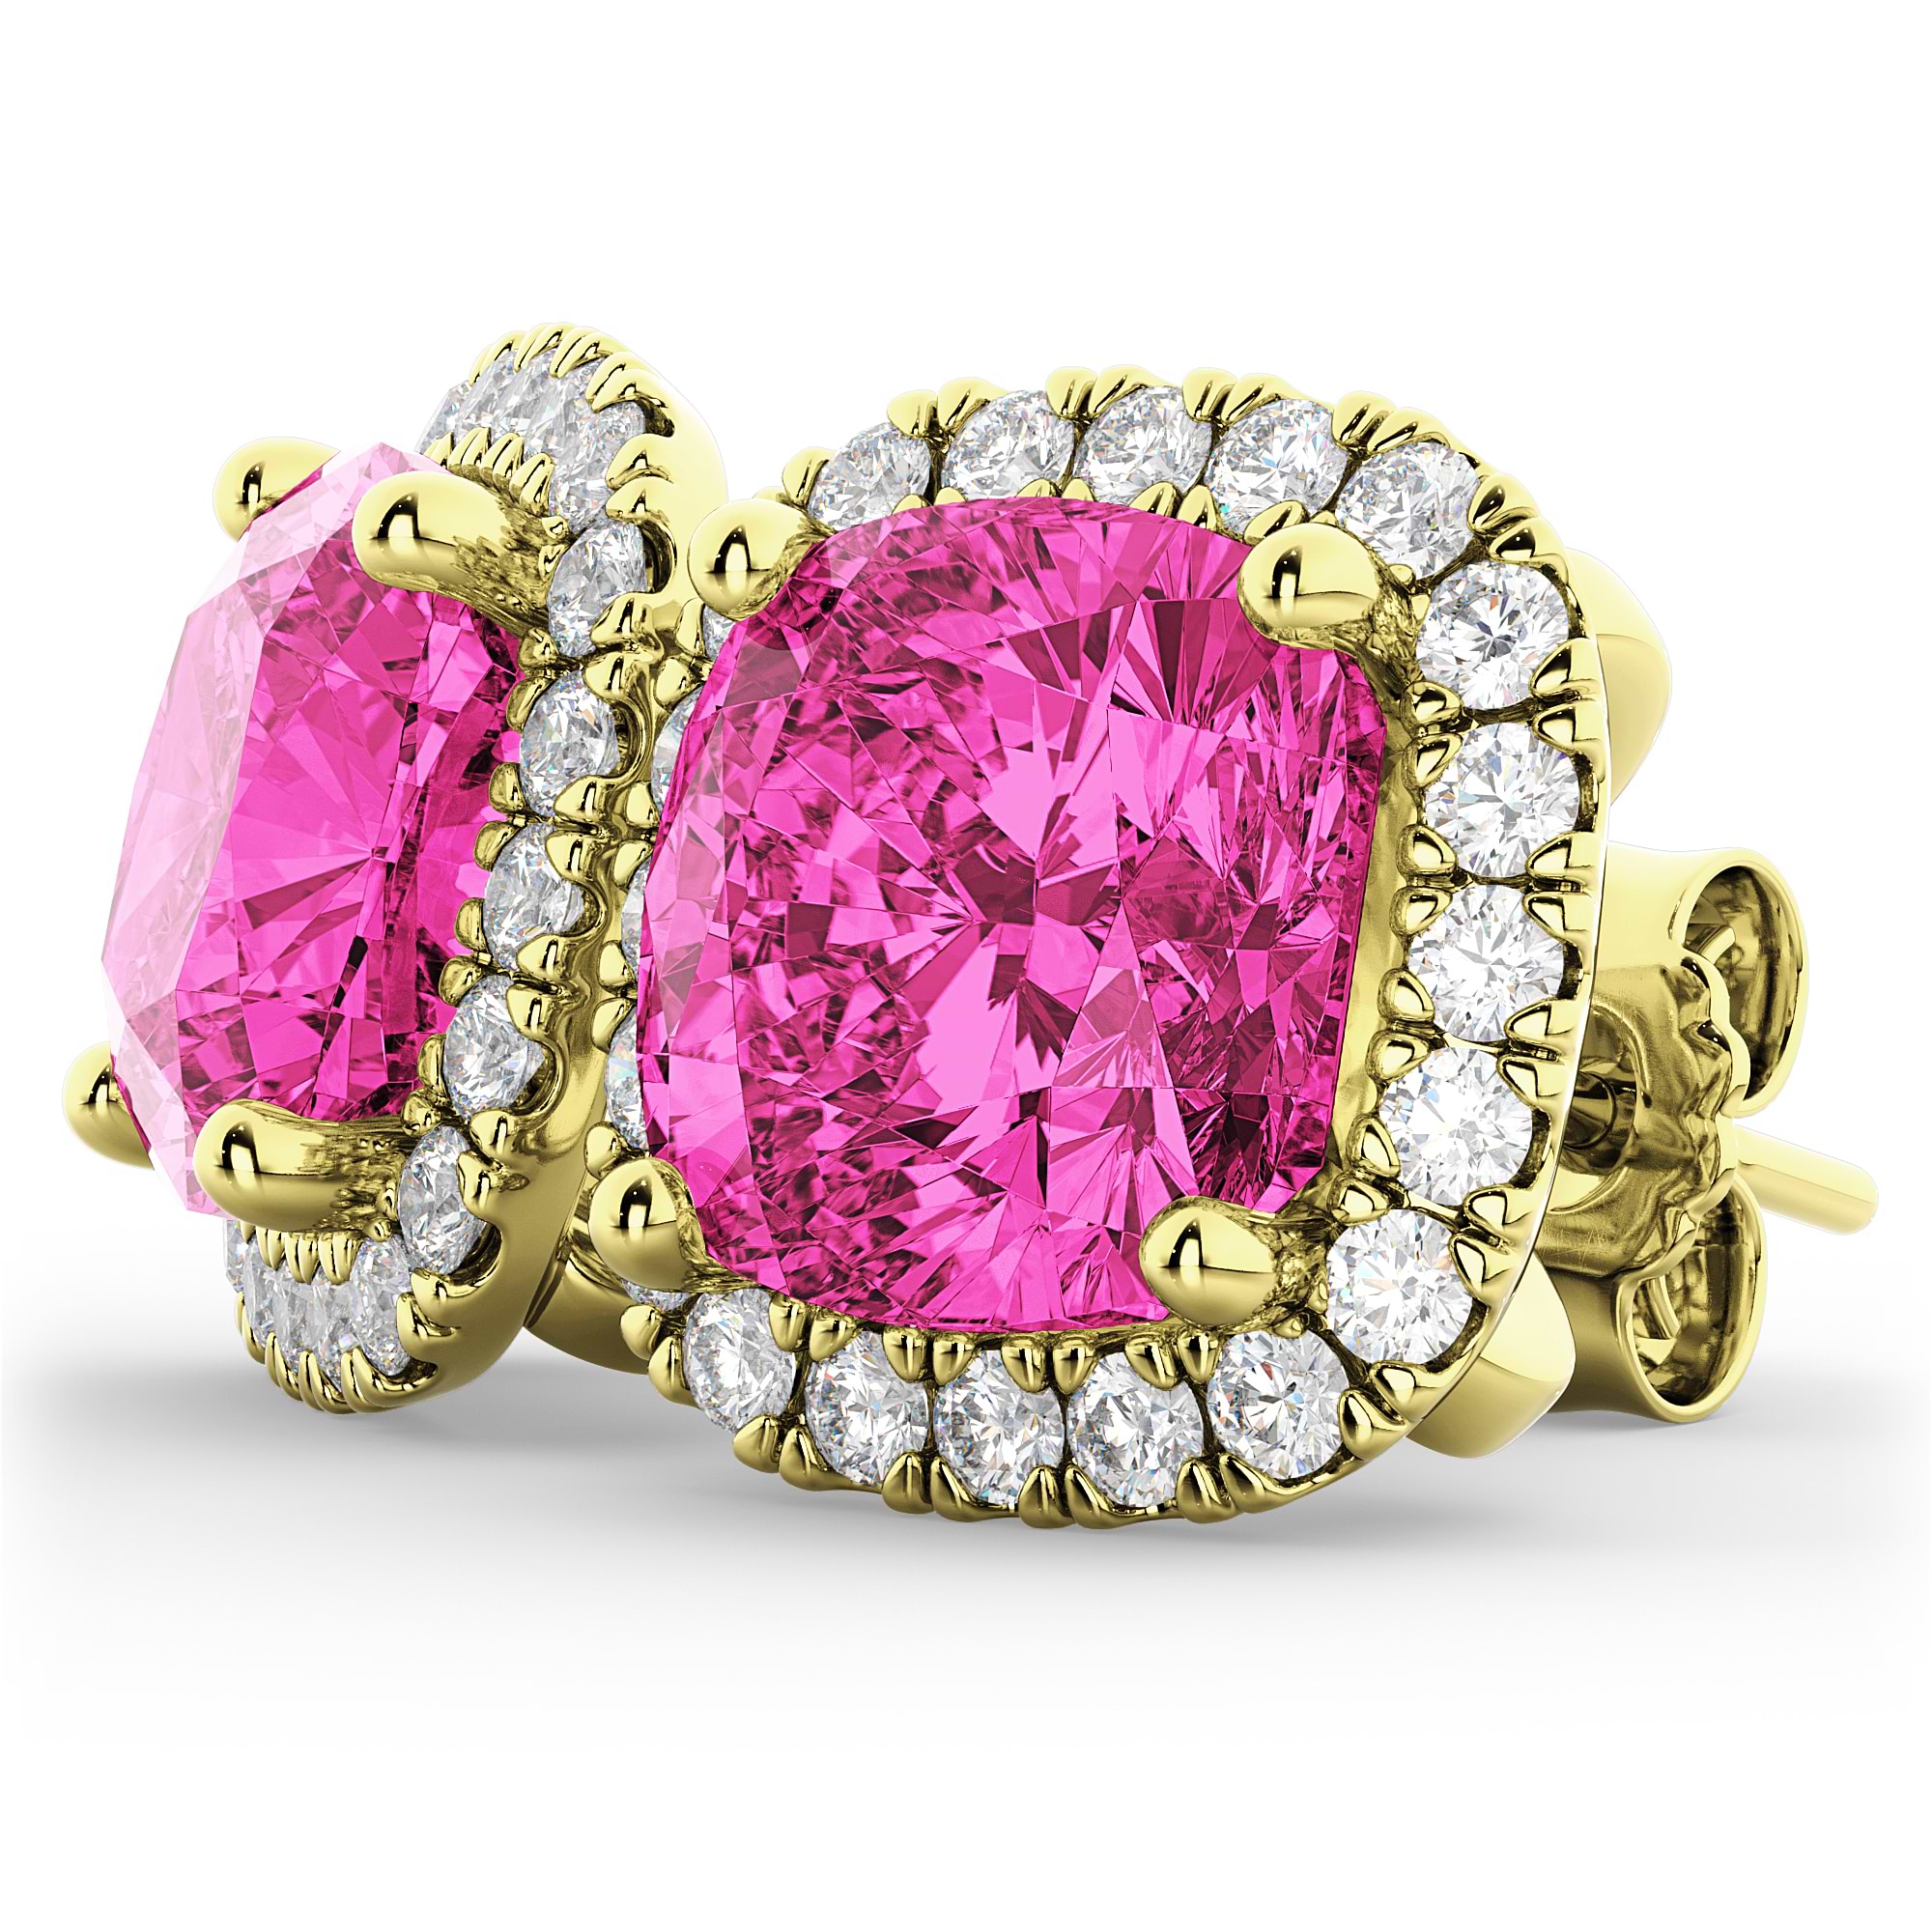 Halo Cushion Pink Tourmaline & Diamond Earrings 14k Yellow Gold (4.04ct)